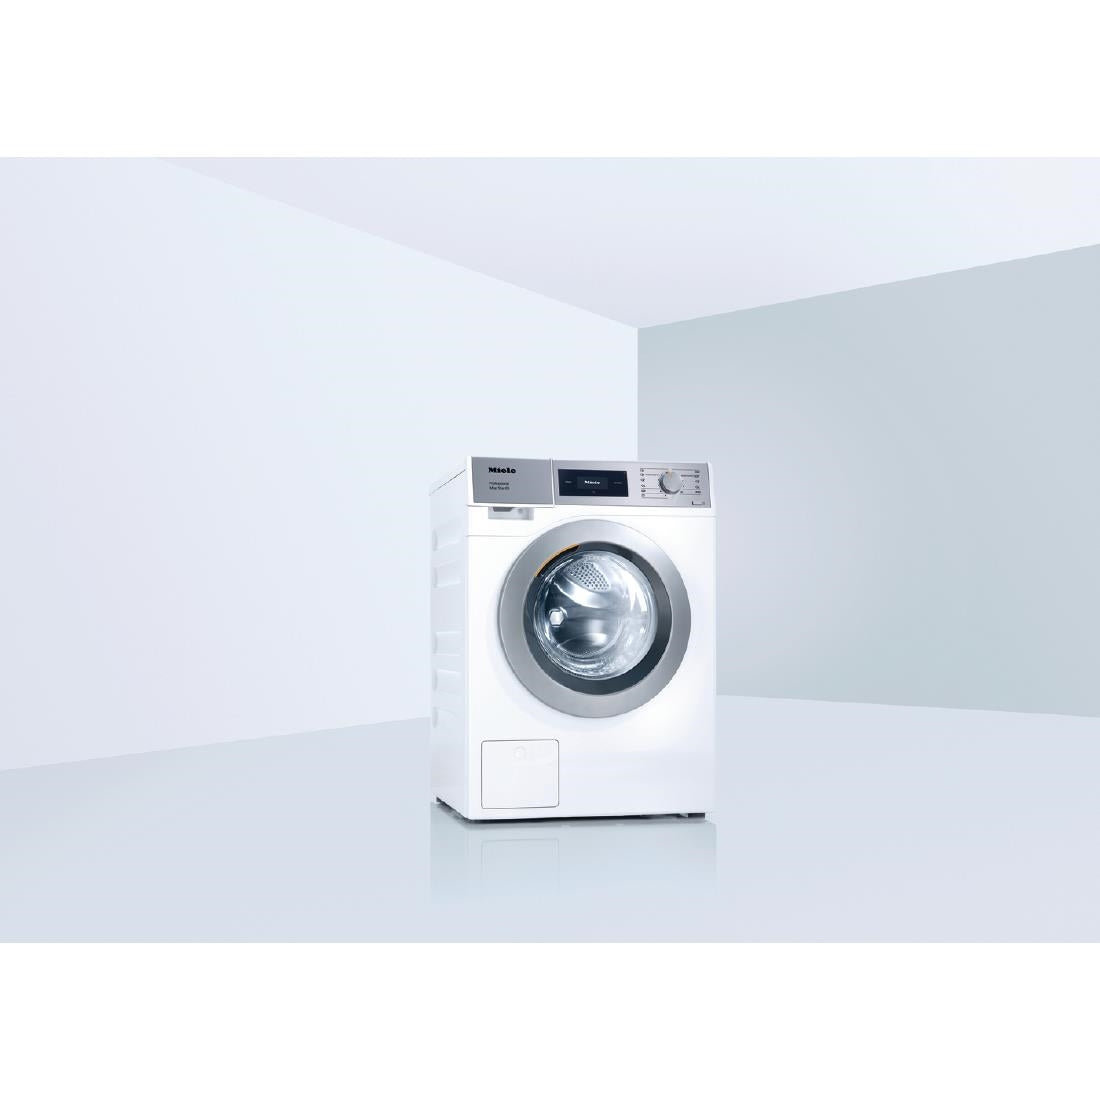 Miele Little Giant Mop Star 60 Washing Machine White 6kg with Drain Pump 4.8kW Single Phase PWM506